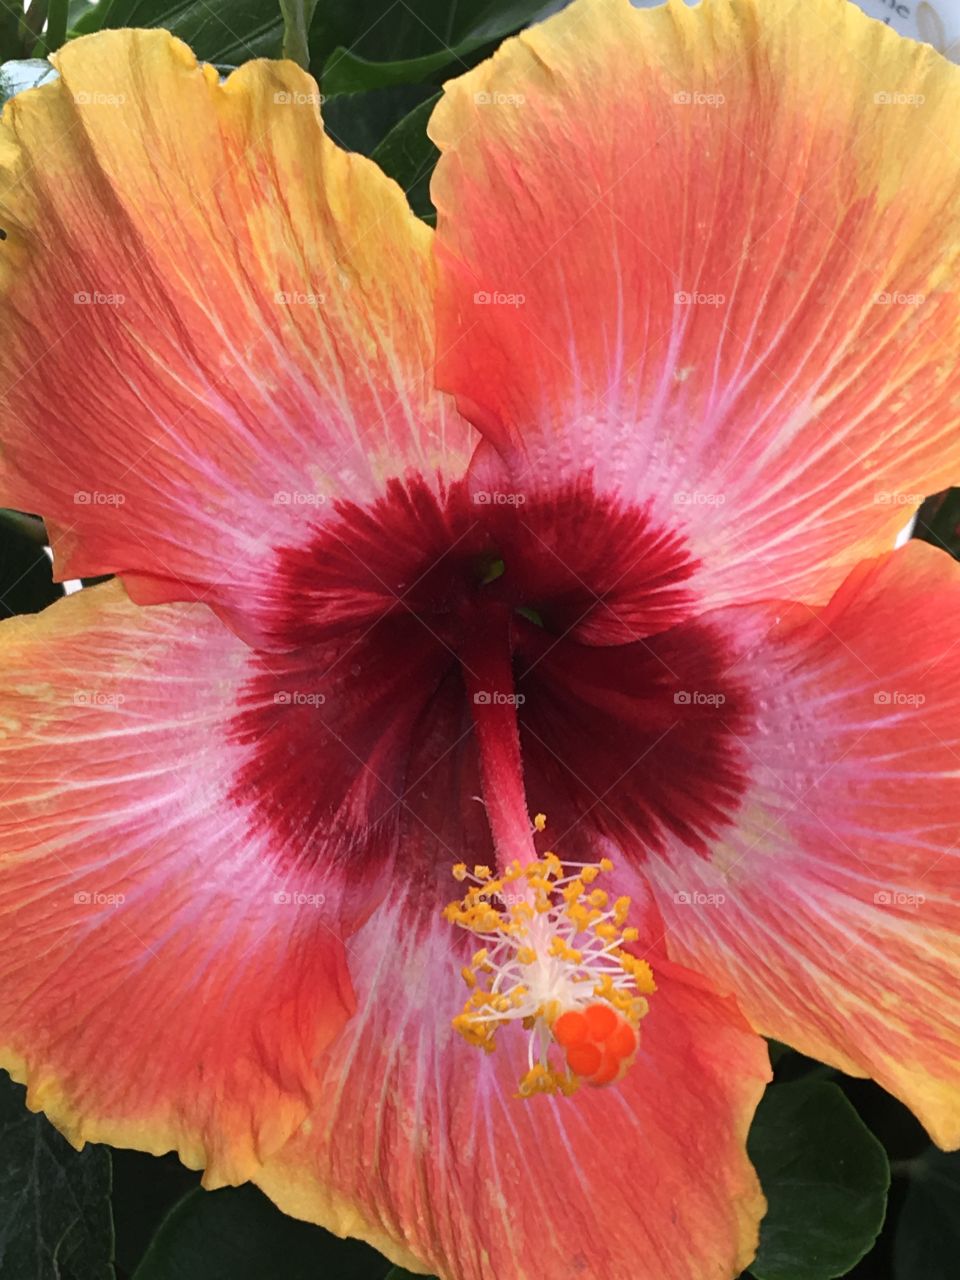 Hibiscus flower blooms